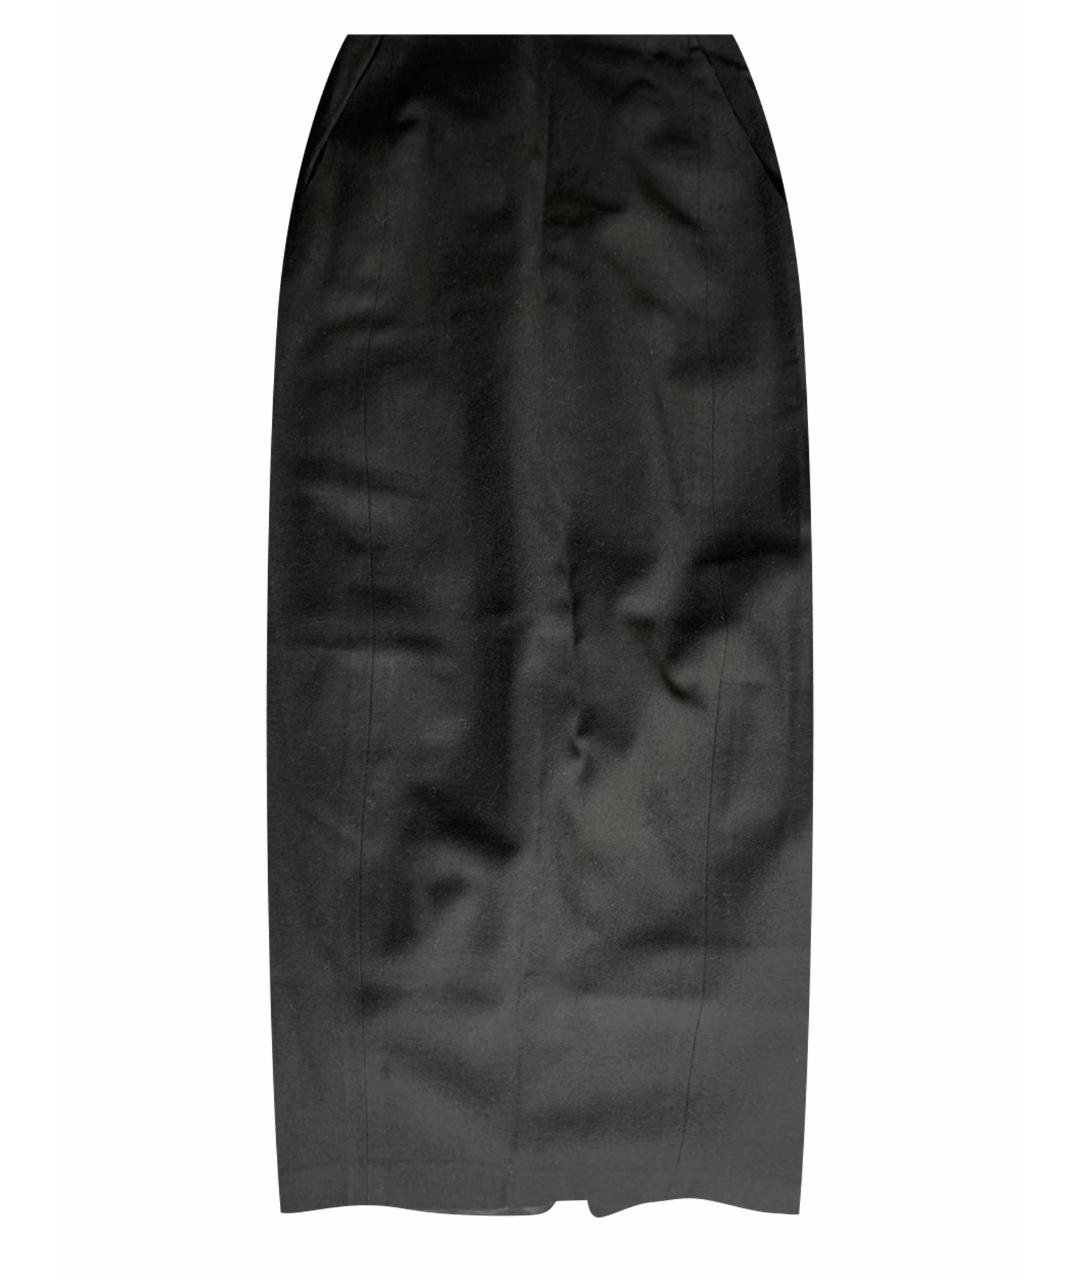 GIANFRANCO FERRE VINTAGE Черная шерстяная юбка макси, фото 1